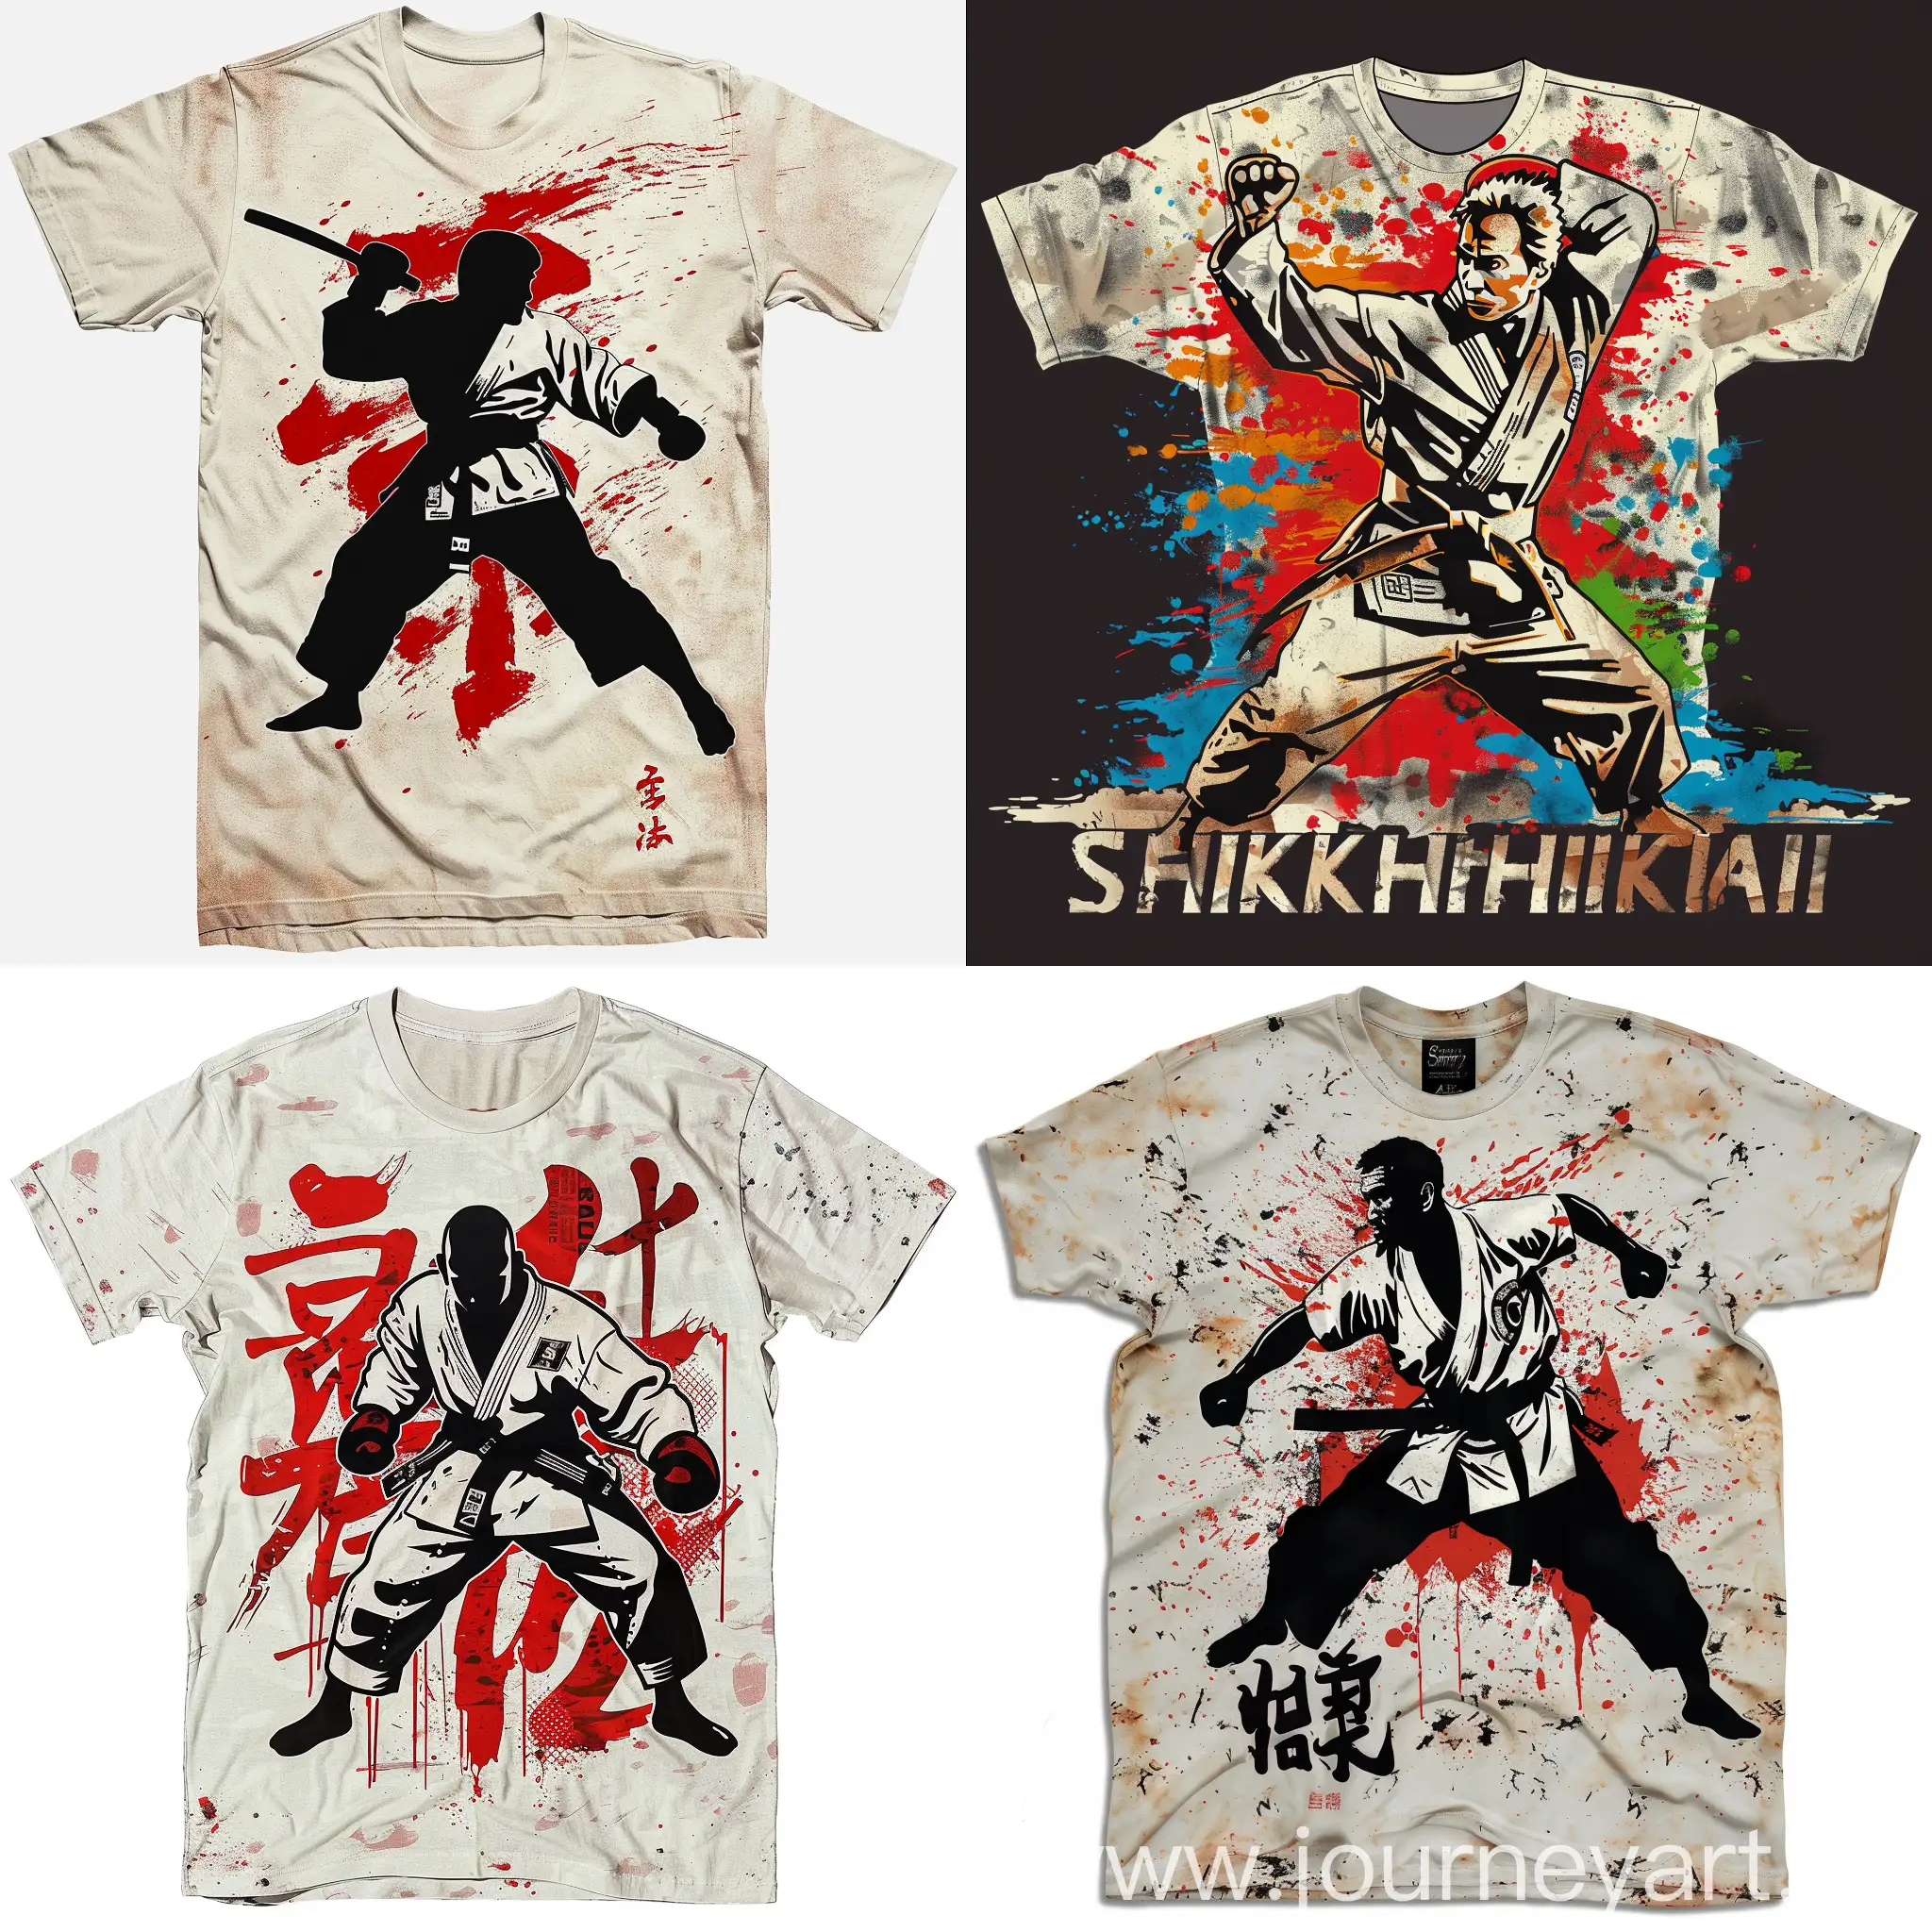 t-shirt design in graffiti style image of Shinkyokushinkai Karate